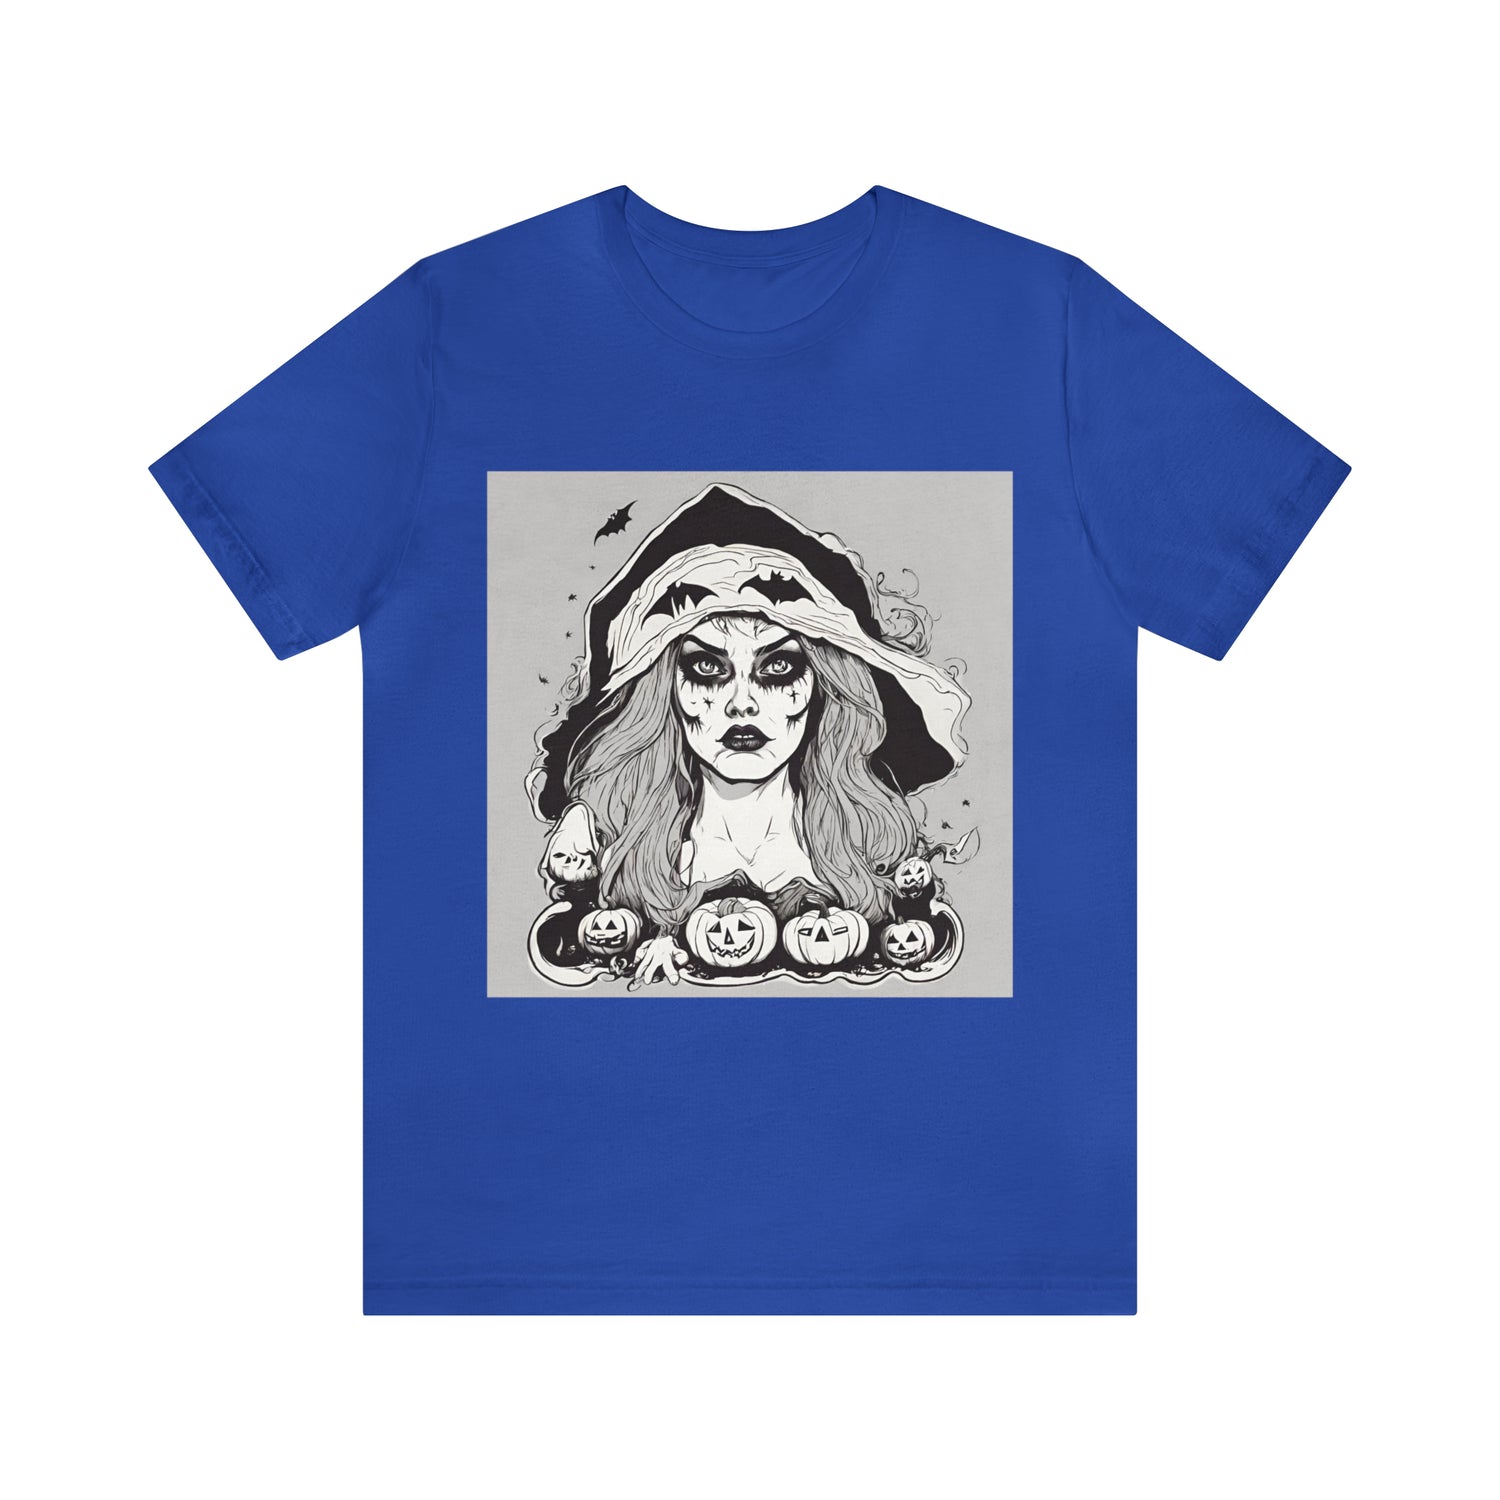 True Royal T-Shirt Tshirt Design Halloween Gift for Friend and Family Short Sleeved Shirt Petrova Designs